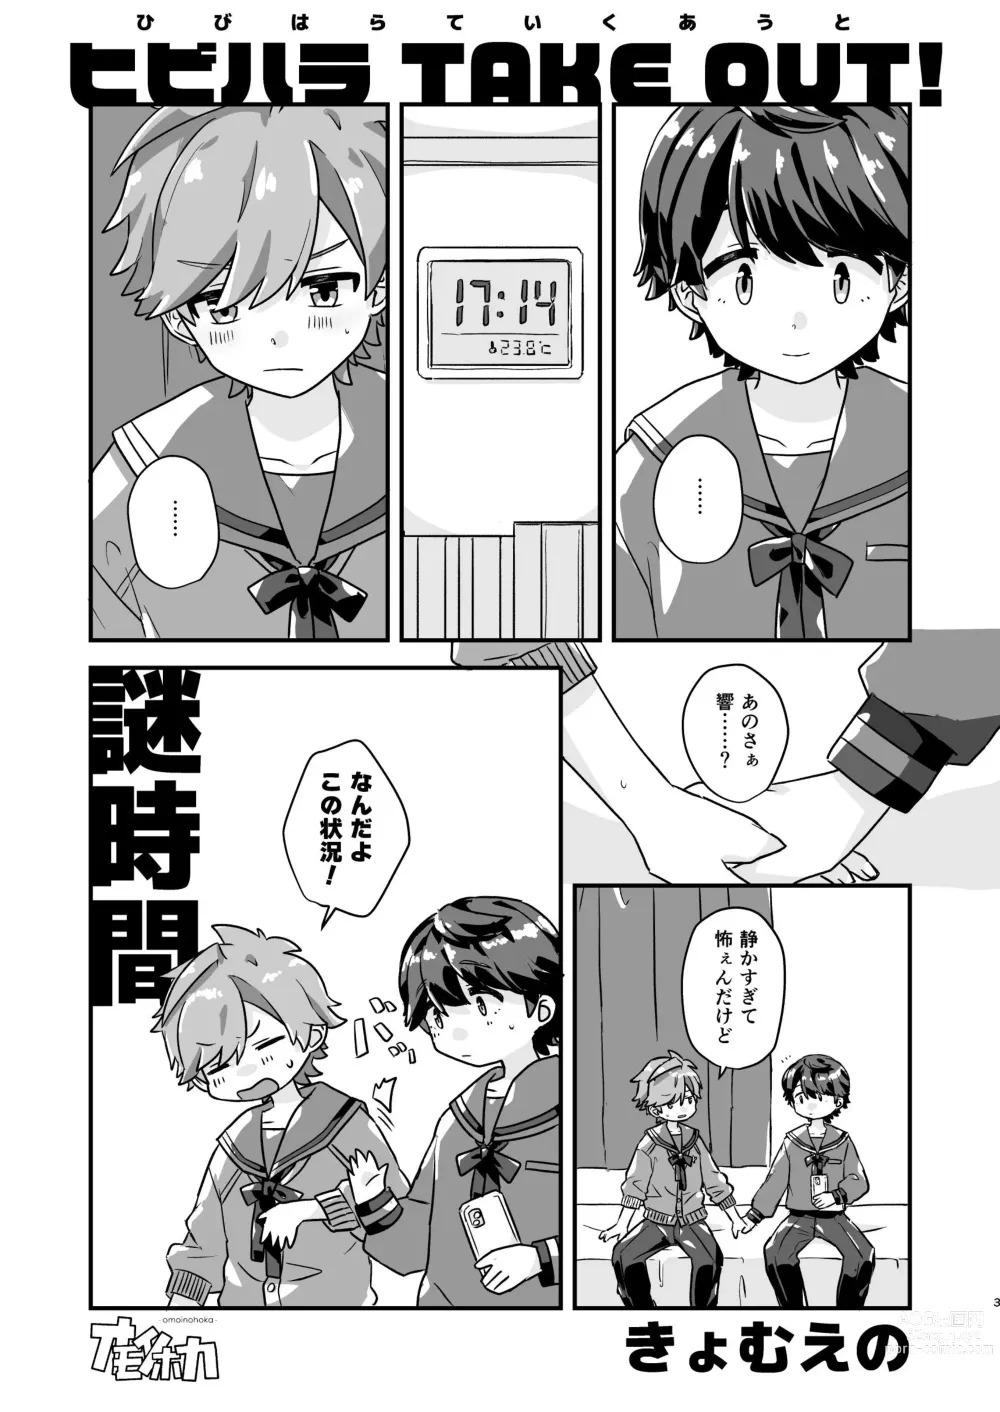 Page 3 of doujinshi Hibihara TAKE OUT!